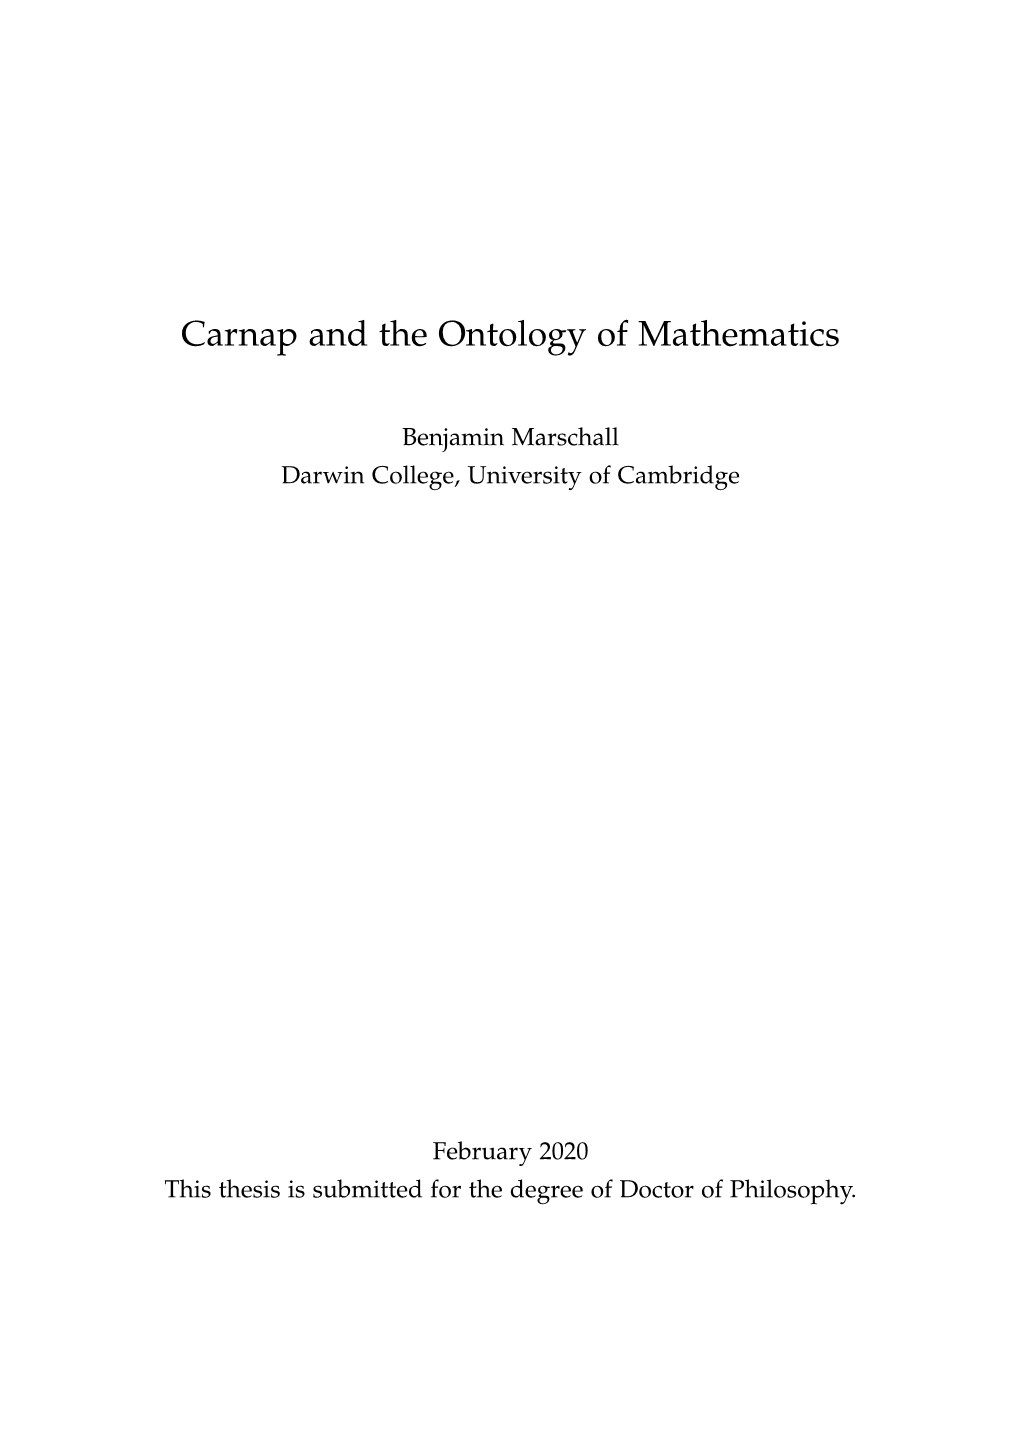 Carnap and the Ontology of Mathematics